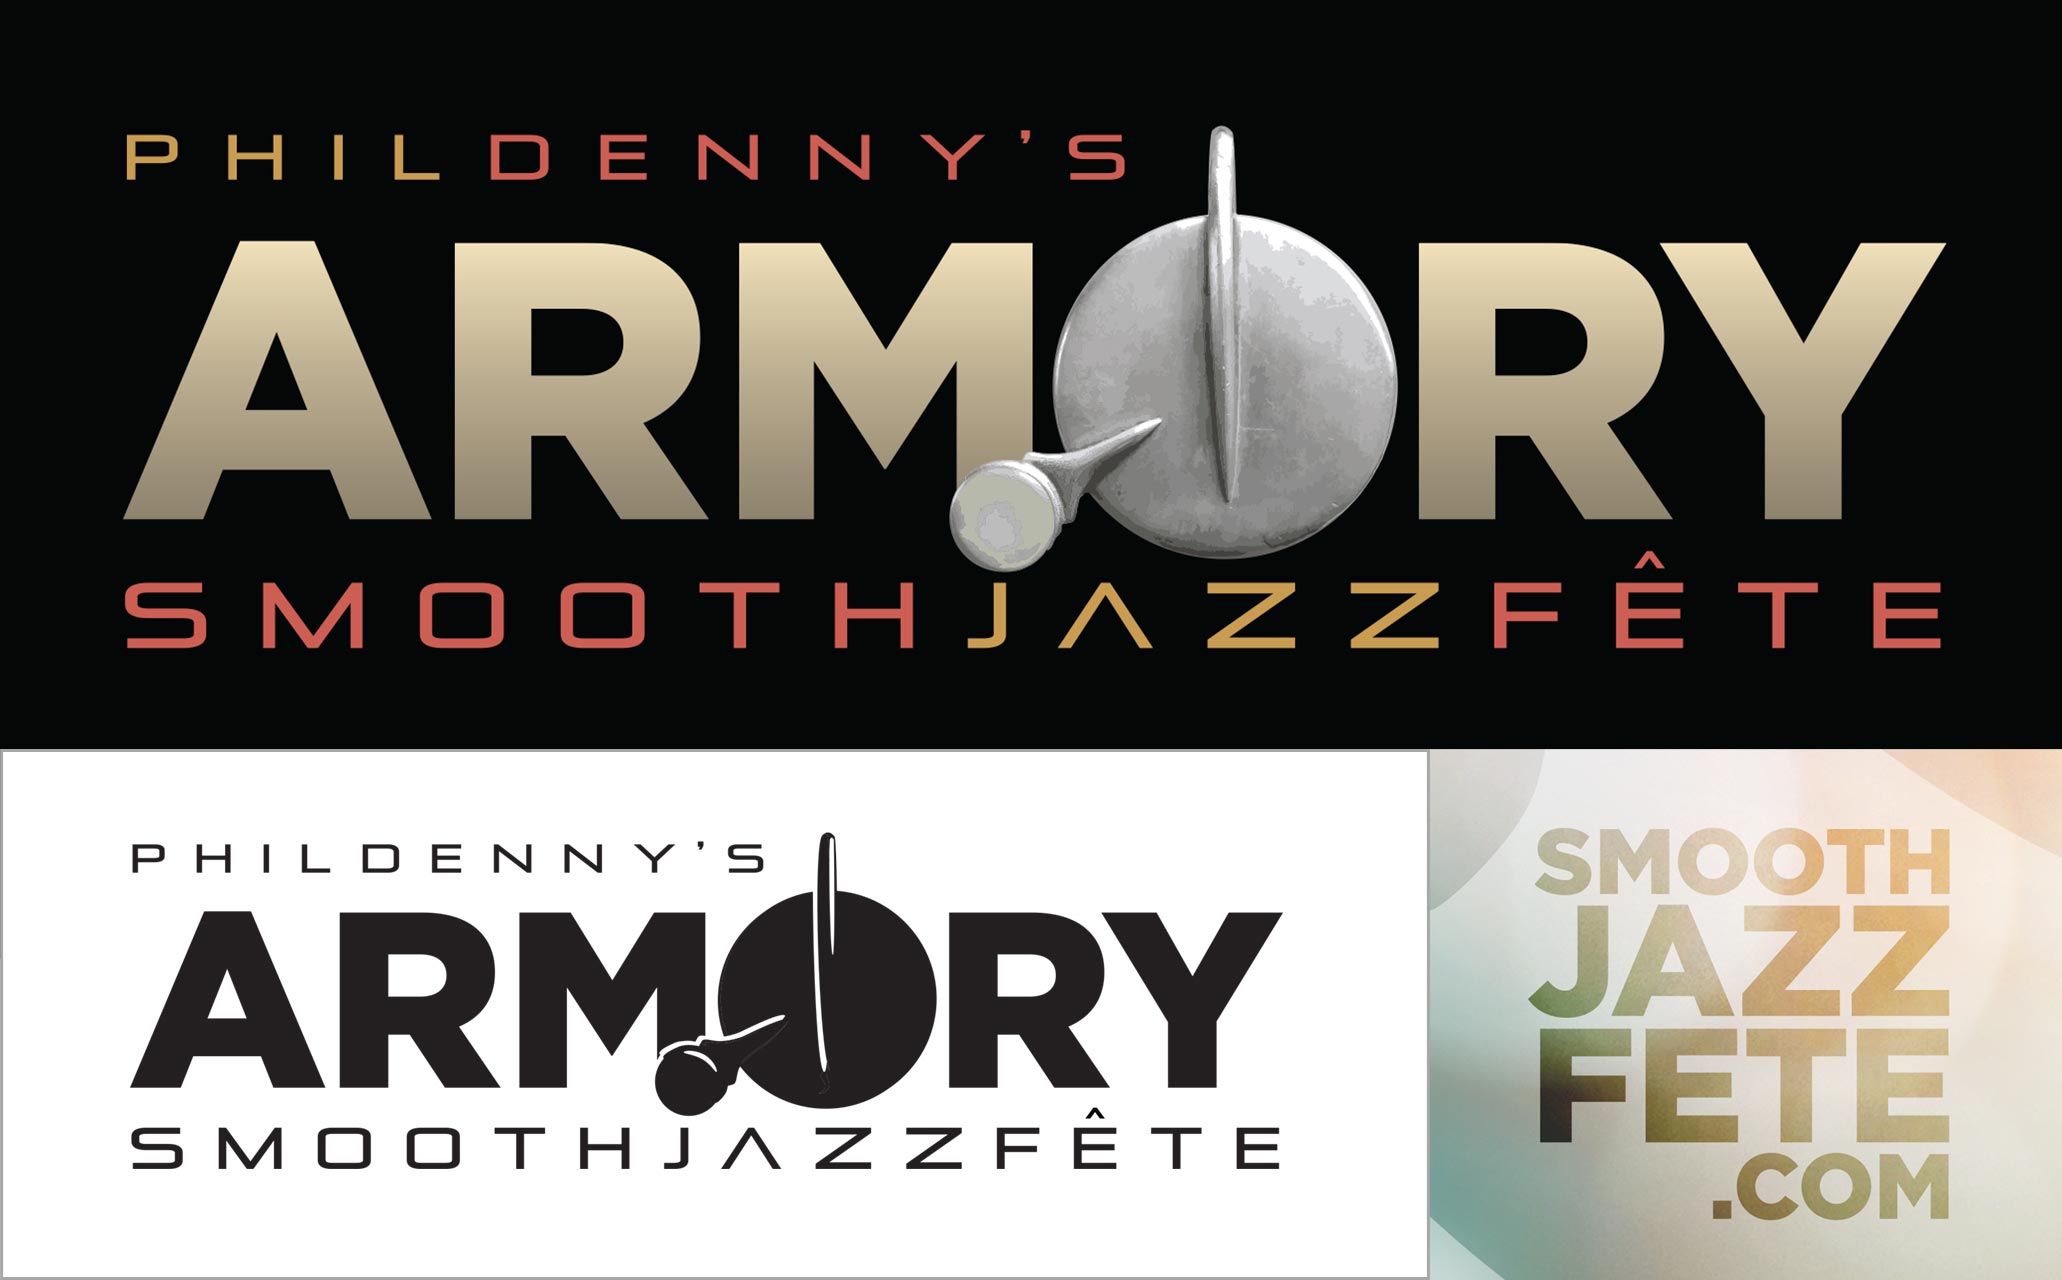 Phil Denny's Armory Smooth Jazz Fete Logo